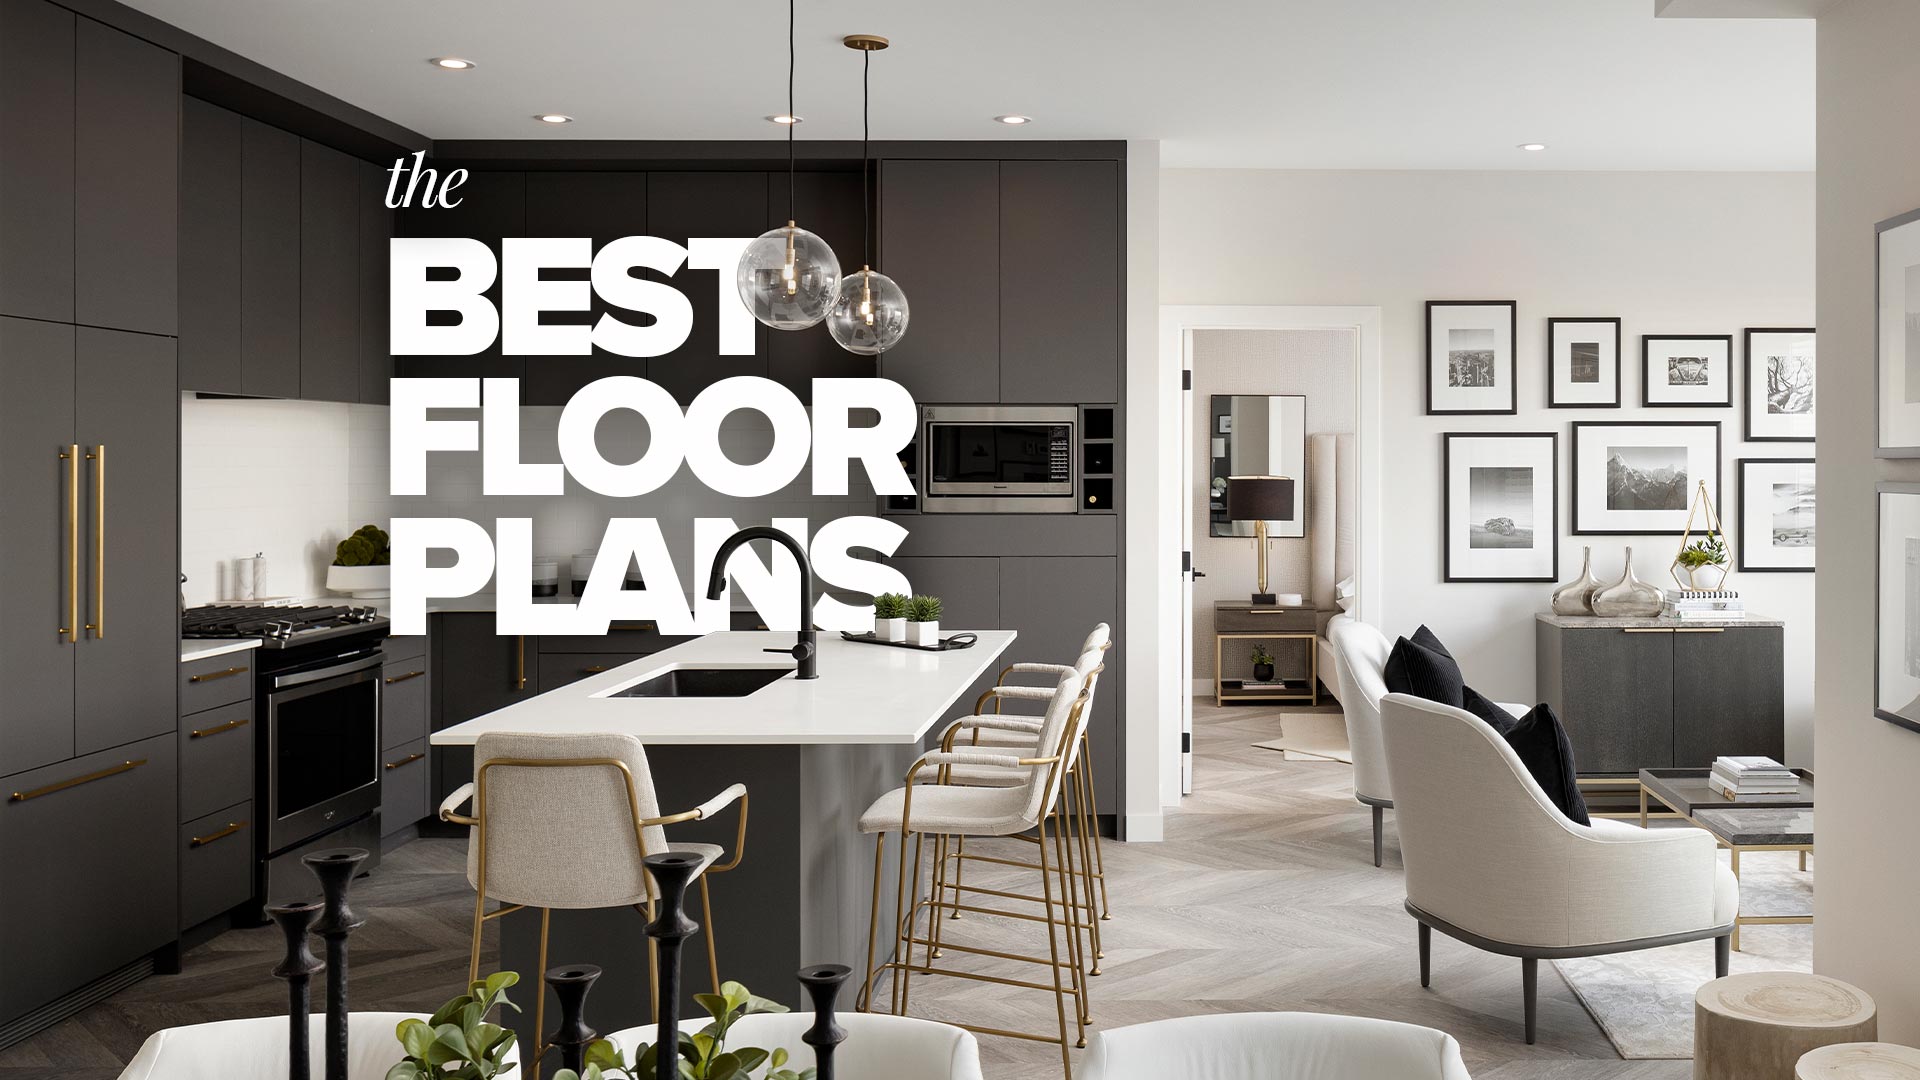 Building Calgary's BEST Floor Plans - Truman Homes